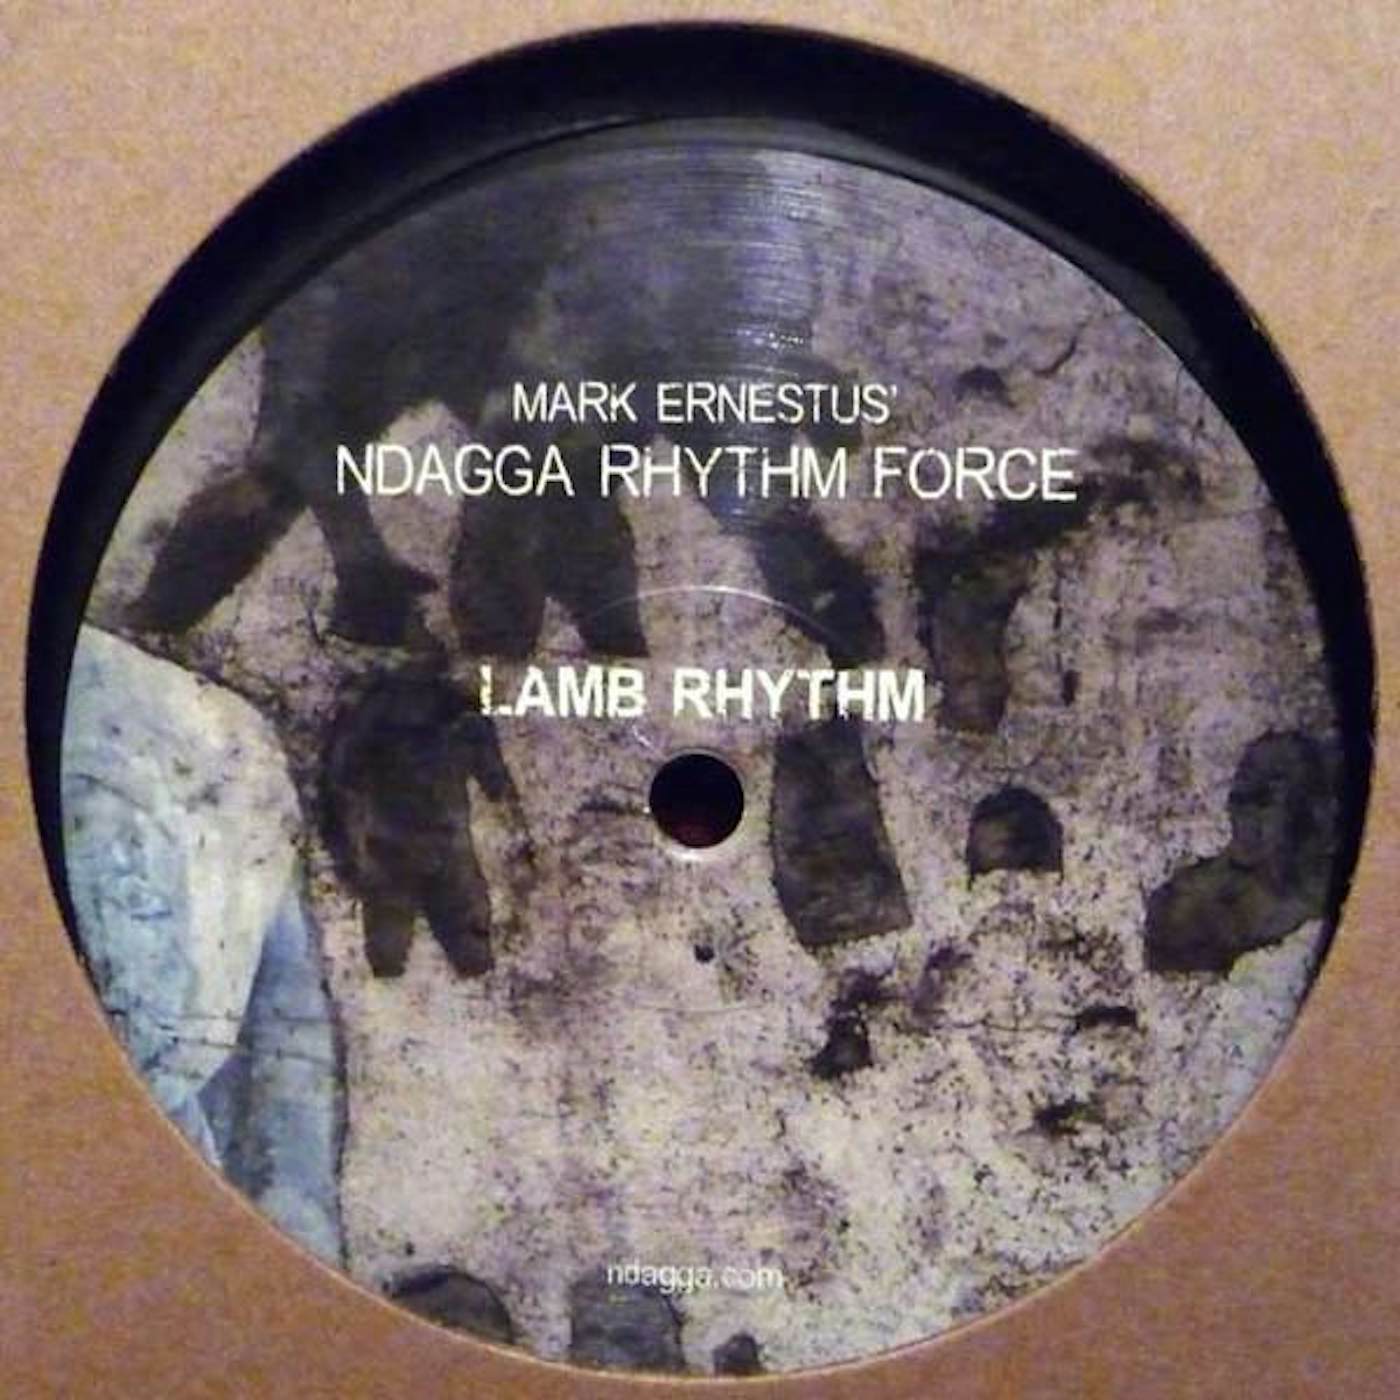 Mark Ernestus’ Ndagga Rhythm Force LAMB JI Vinyl Record